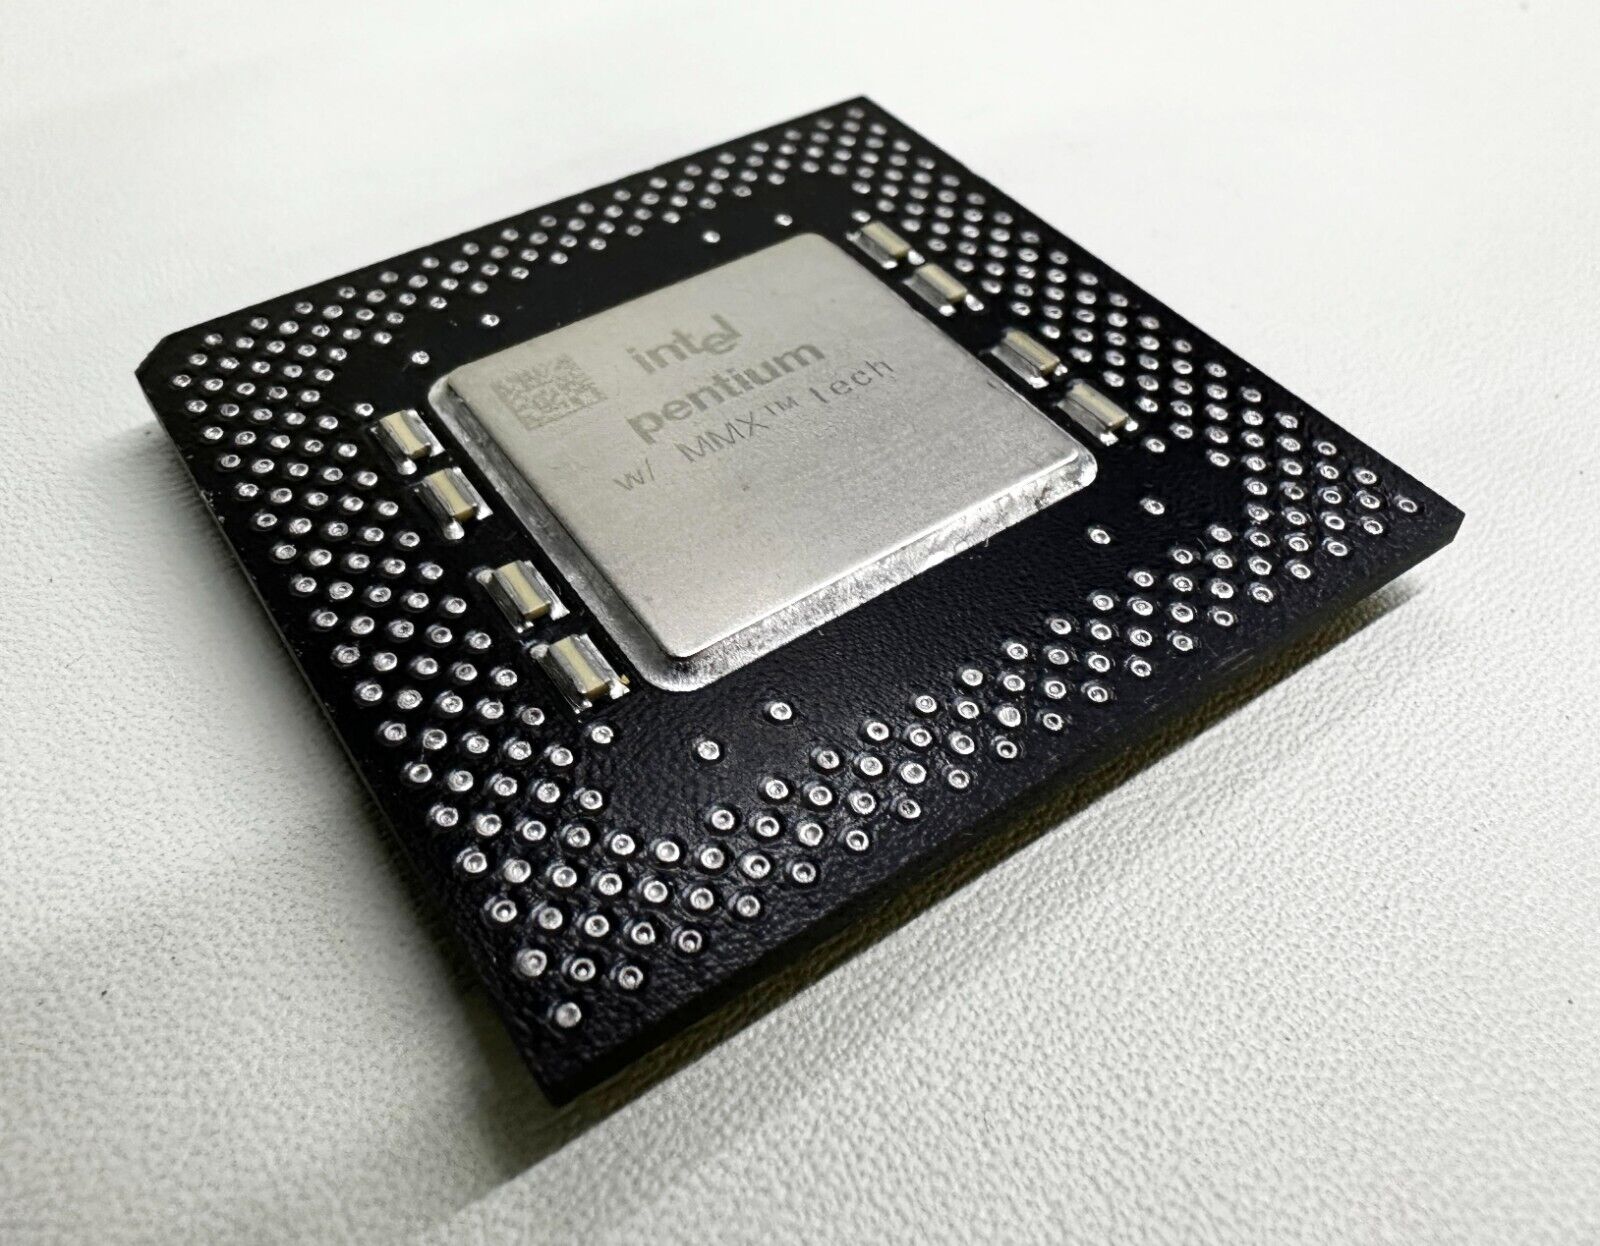 Vintage Intel Pentium MMX 233 MHz Desktop CPU Processor - SL27S - FV80503233